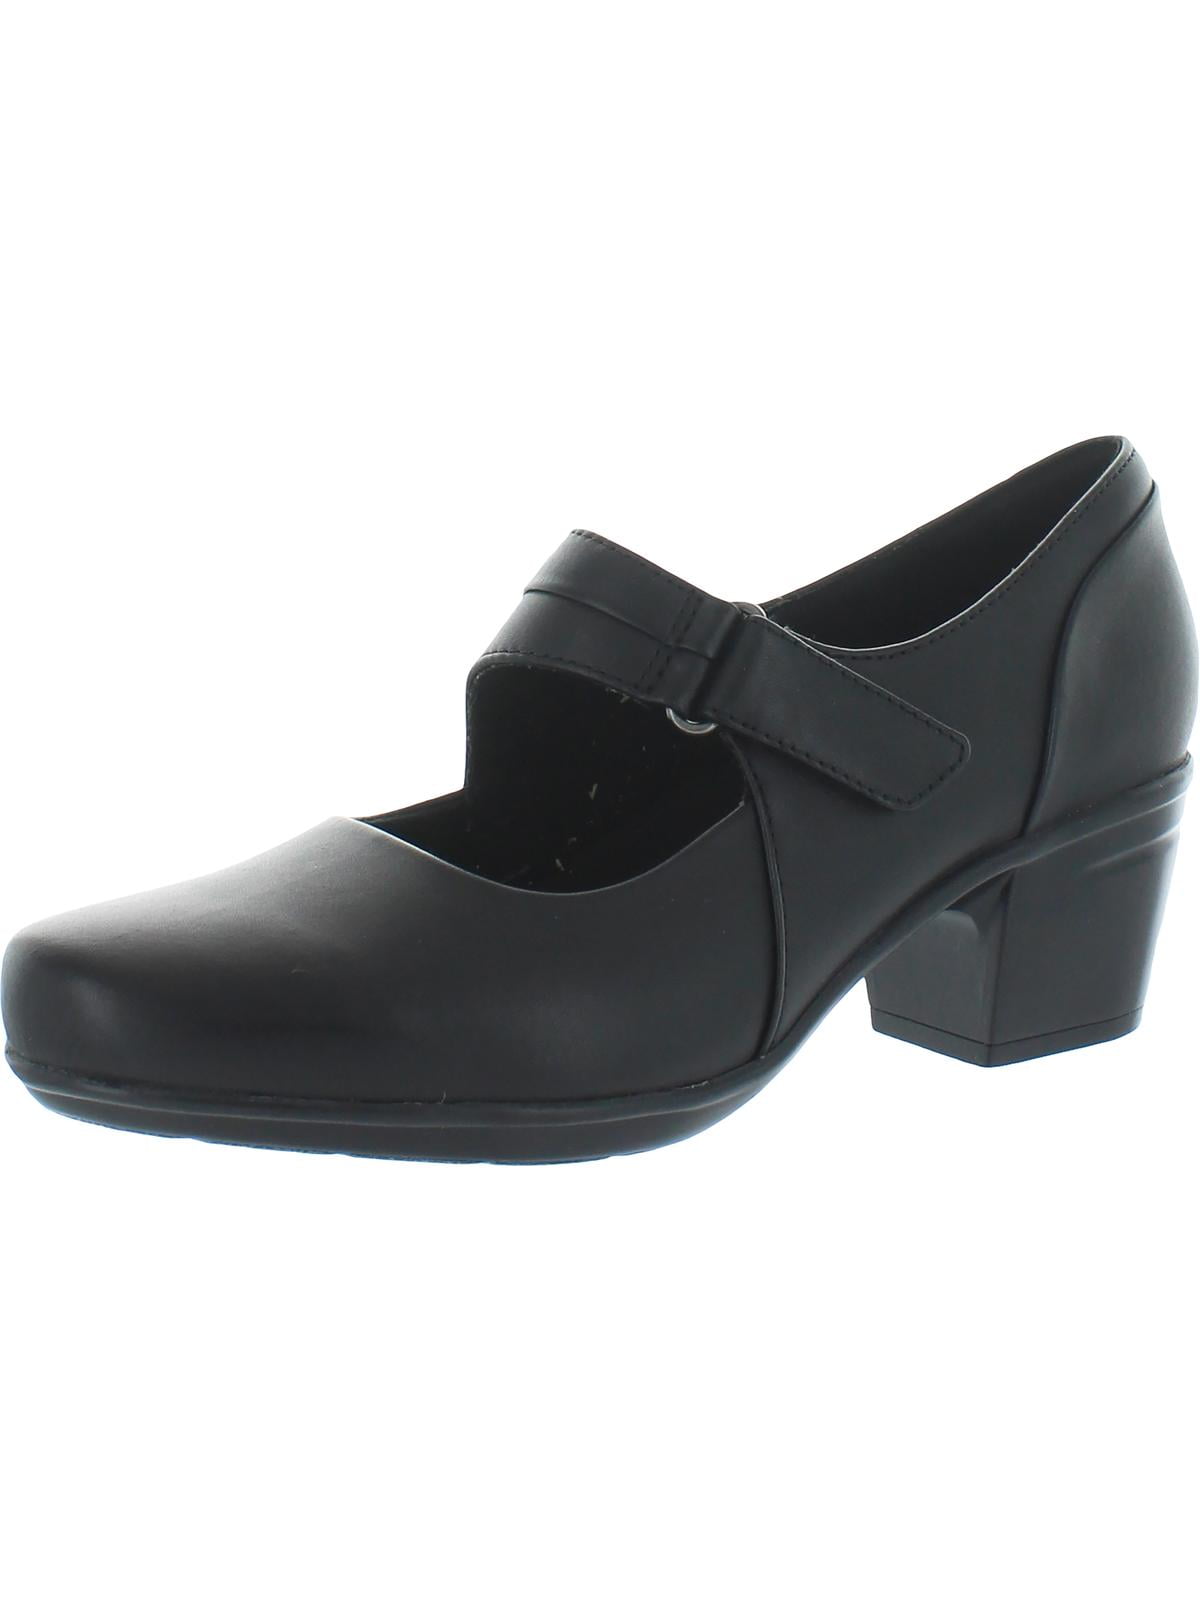 clarks emslie lulin women's ortholite mary janes heels